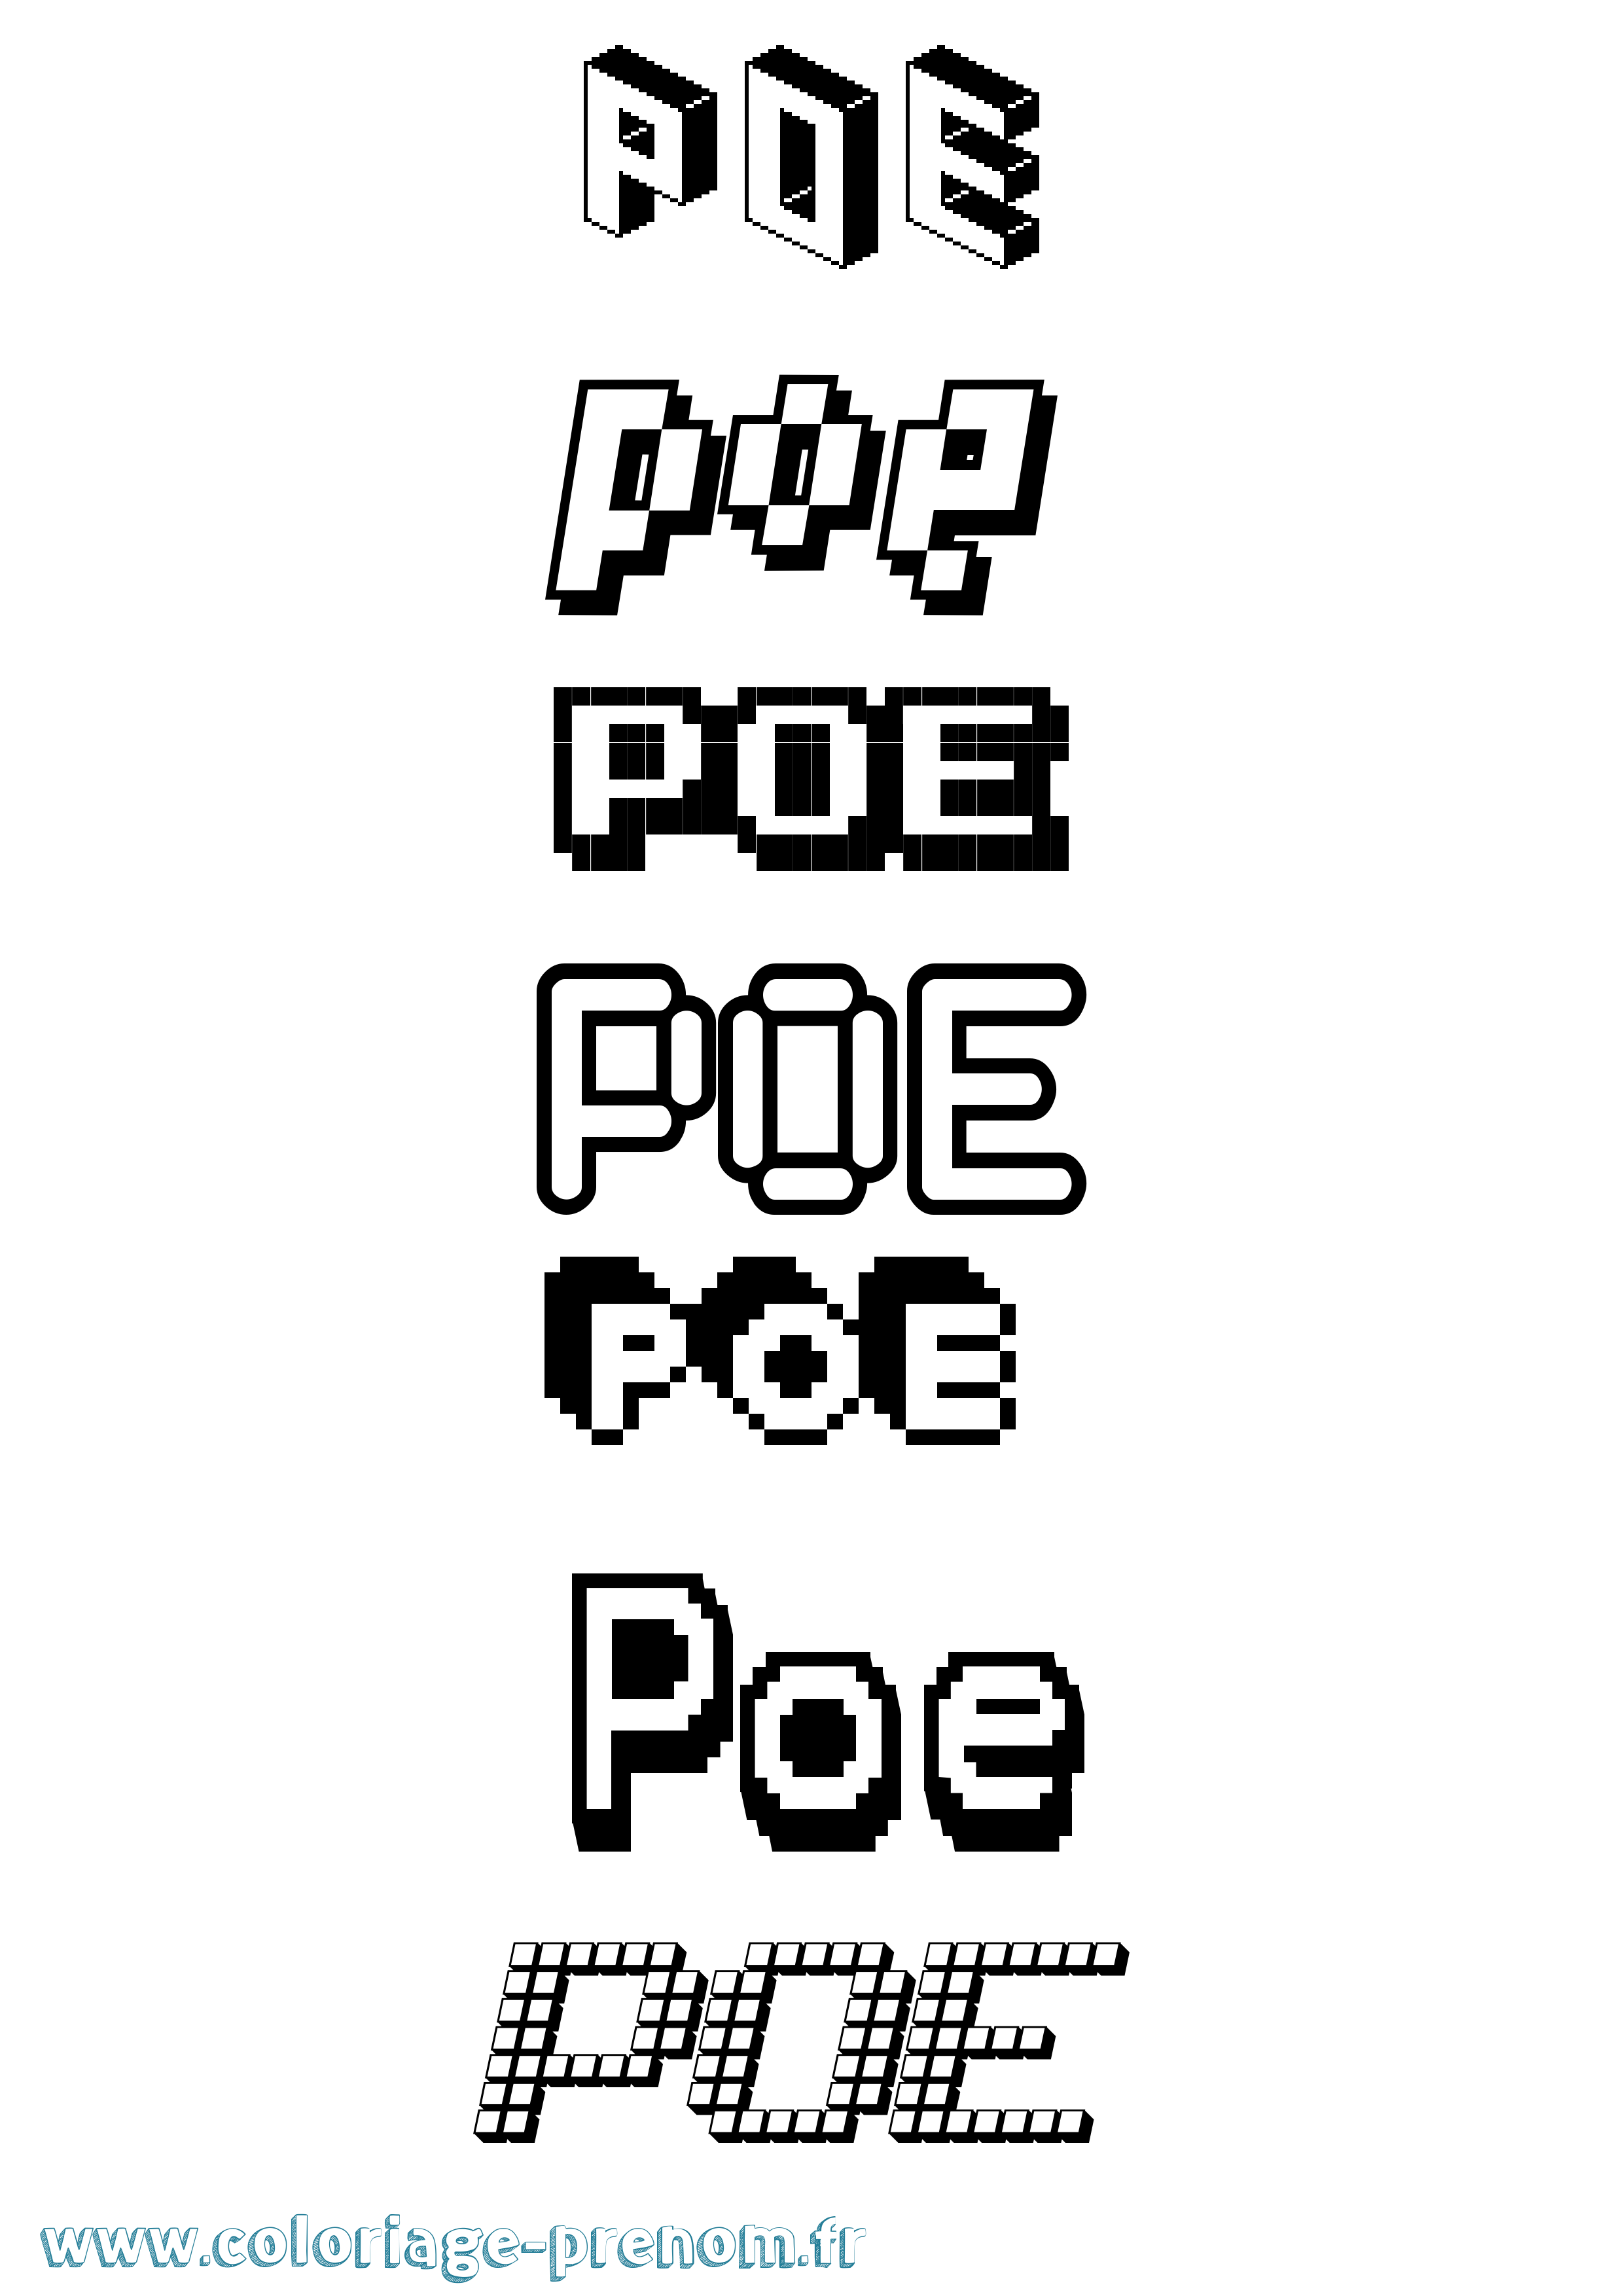 Coloriage prénom Poe Pixel